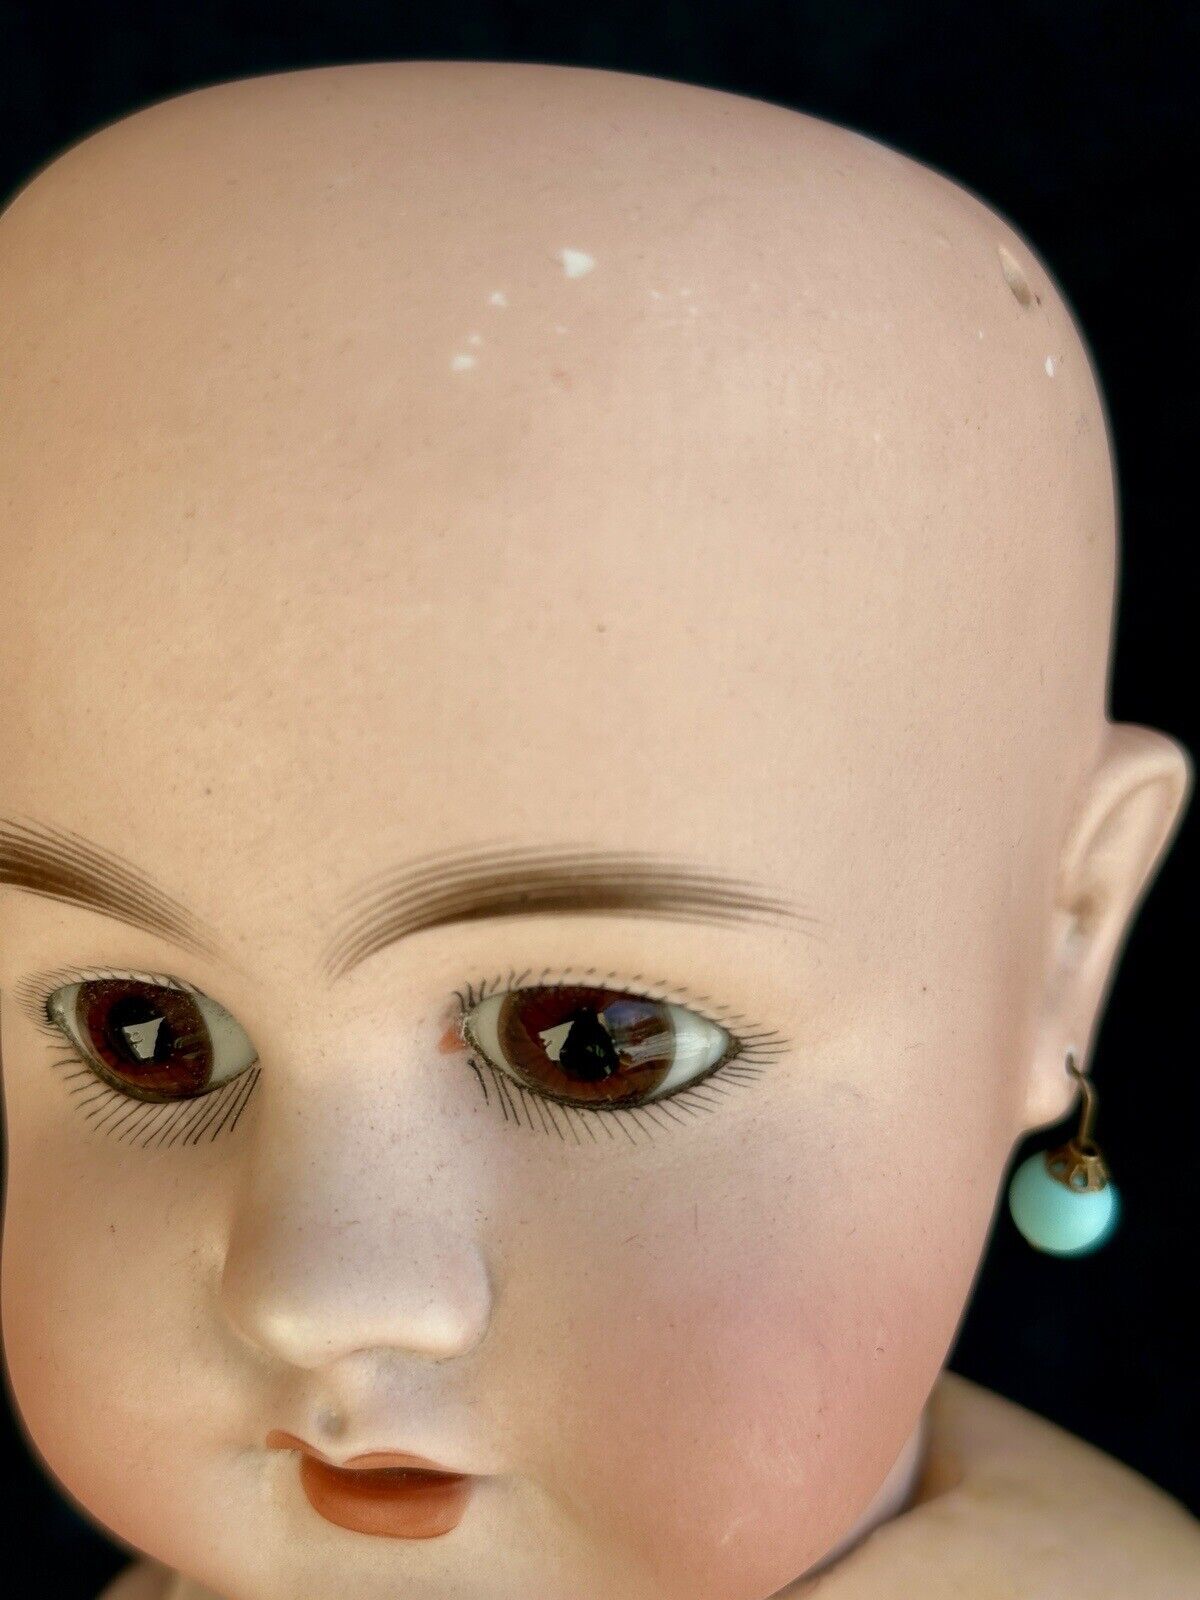 Antique French 24” Henri Rostal Mon Tresor Bébé Bisque Head Doll